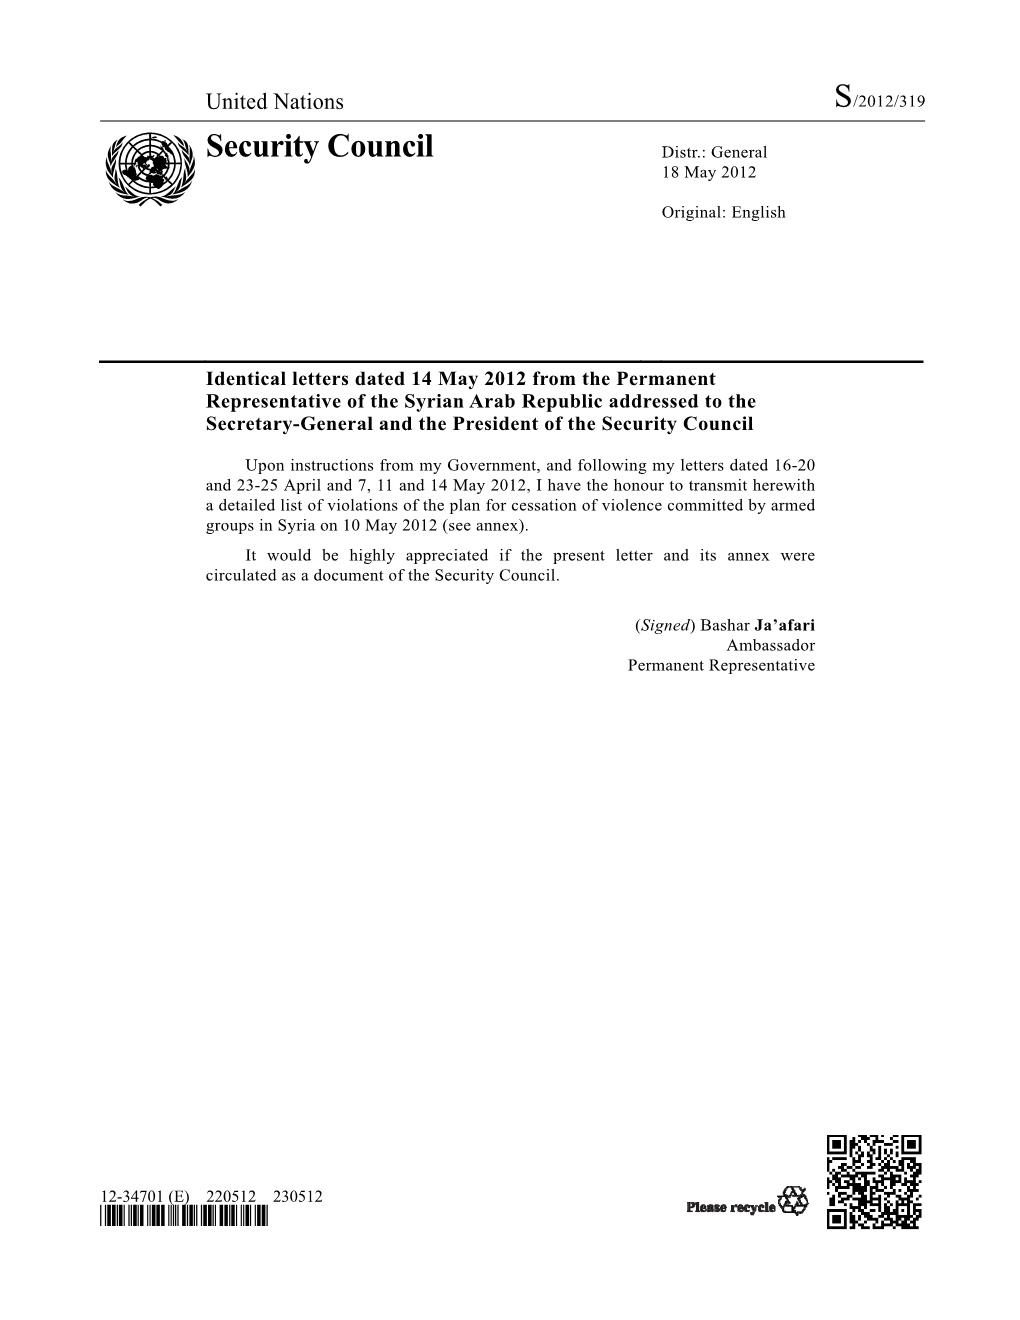 Security Council Distr.: General 18 May 2012